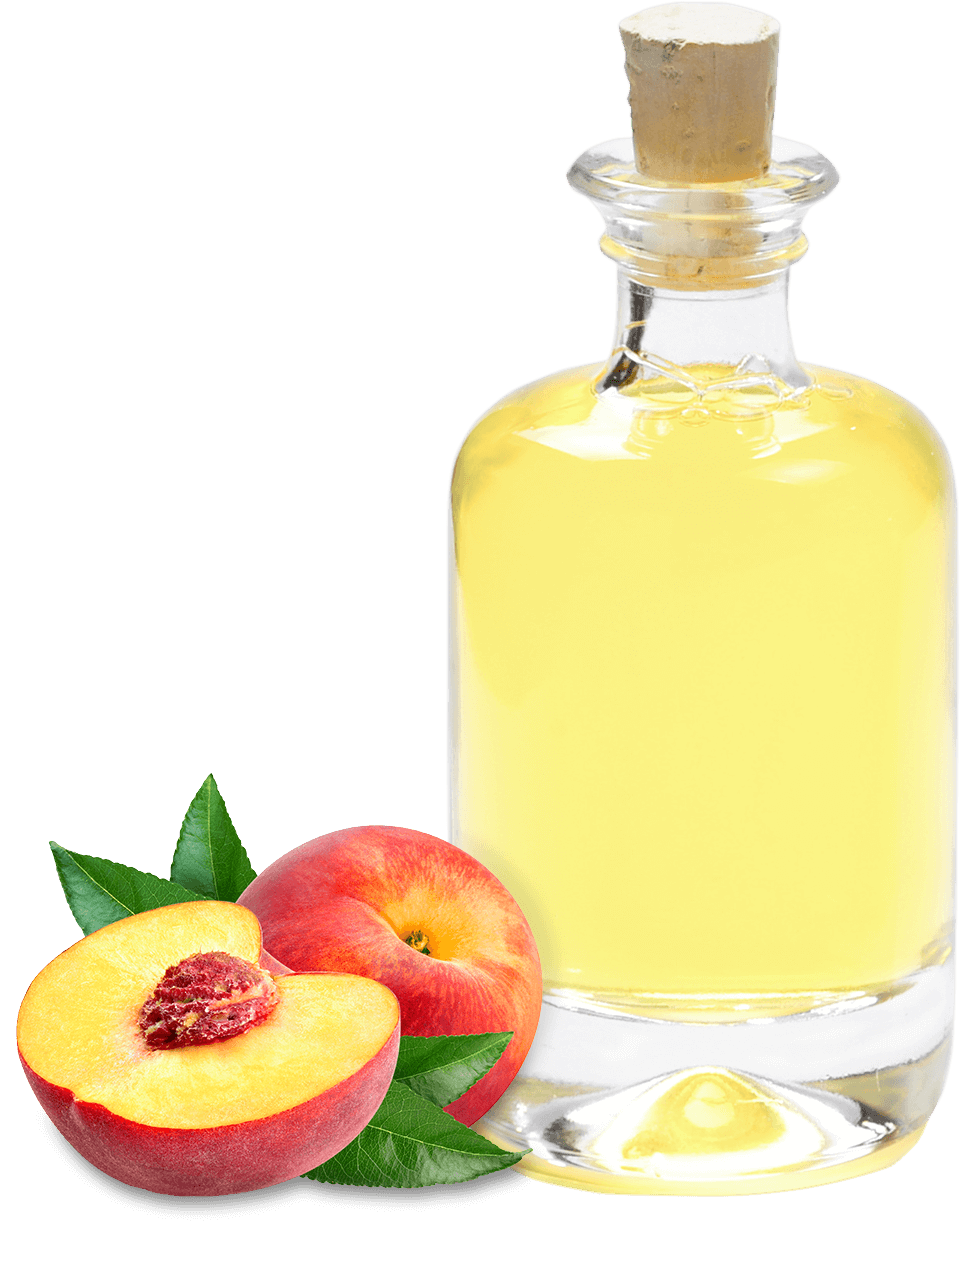 Peach Kernel Oil Organic - Prunus Persica Oil